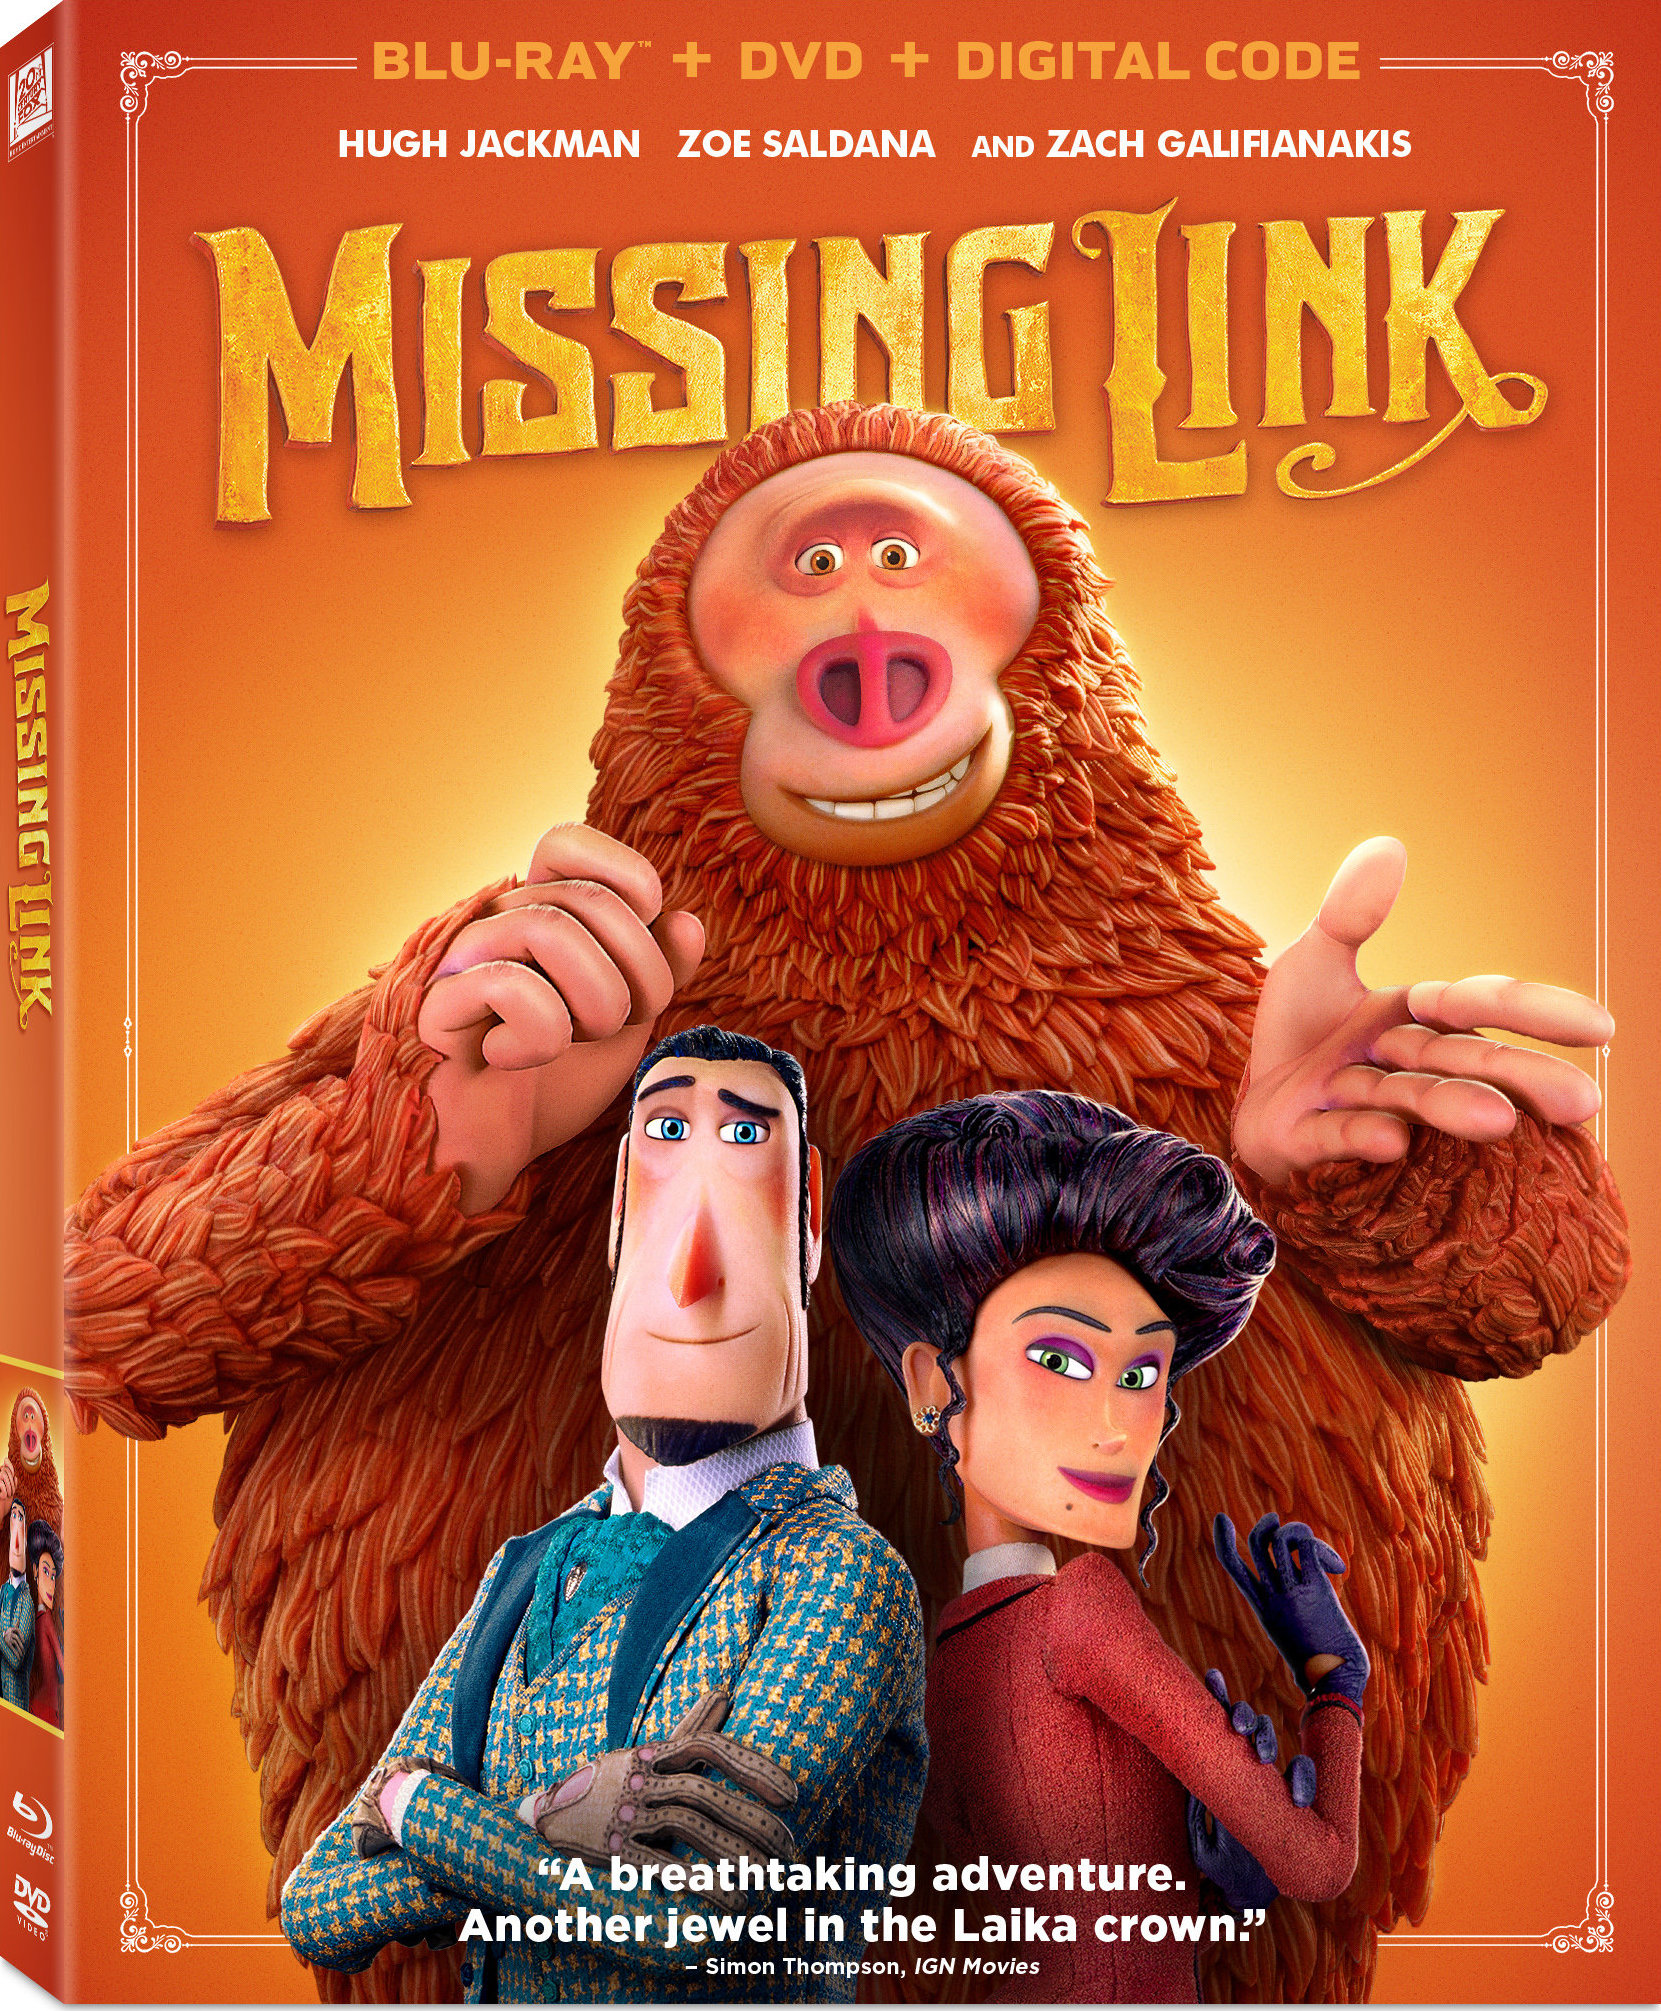 Missing Link [Blu-ray + DVD + Digital] [2018] $5.99 - $5.99